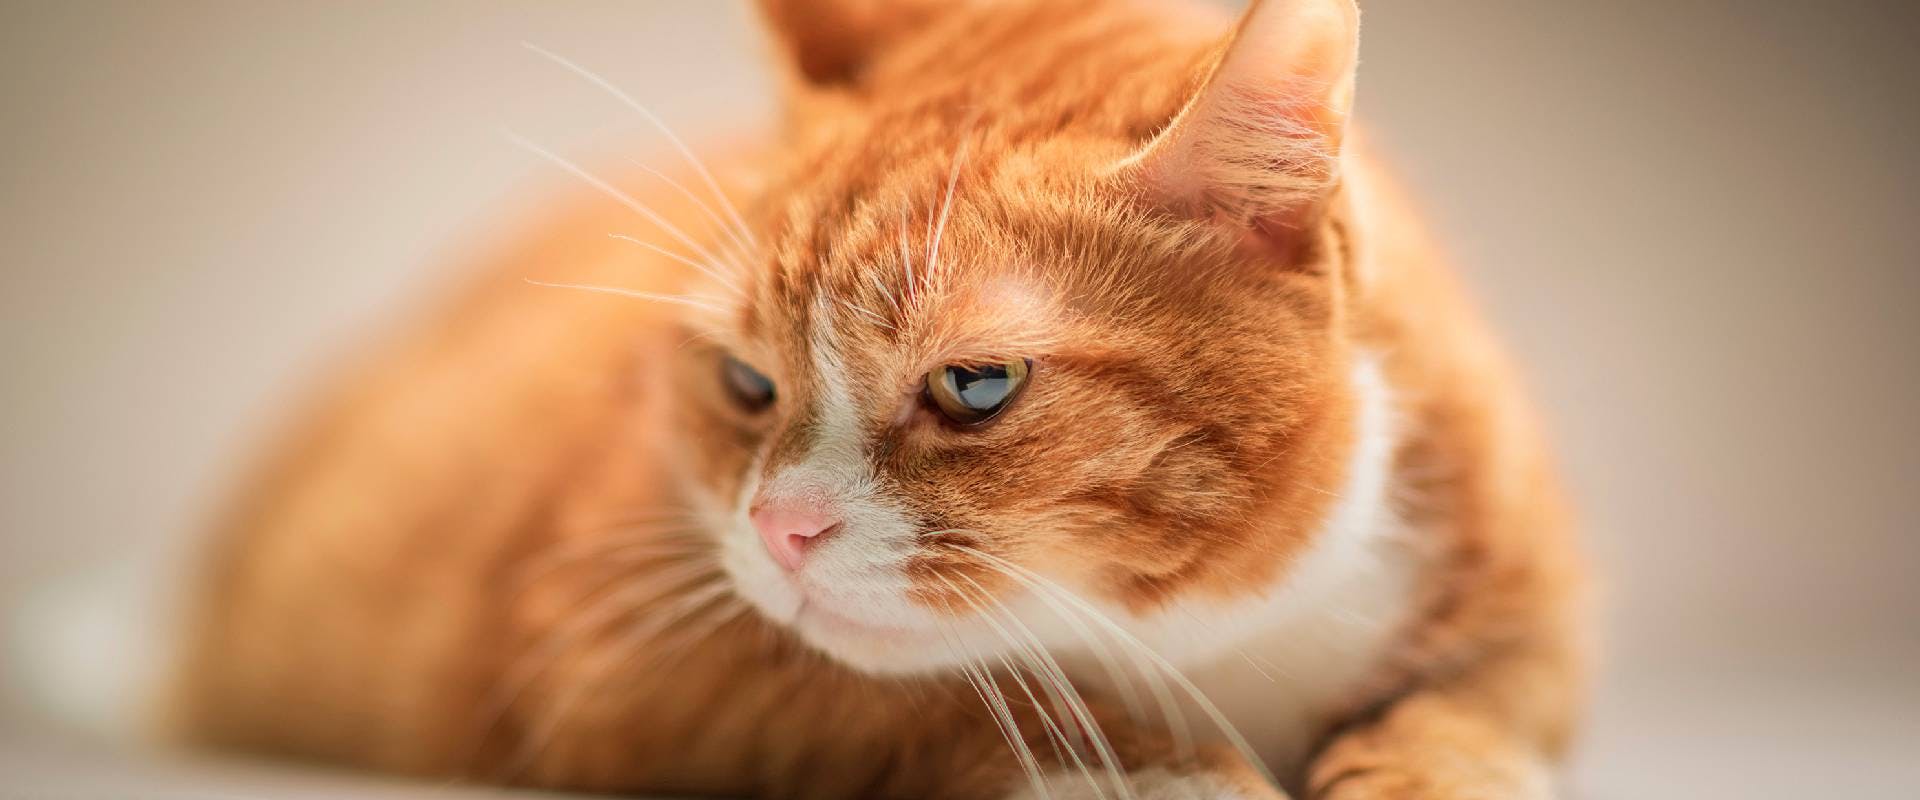 ginger cat close up